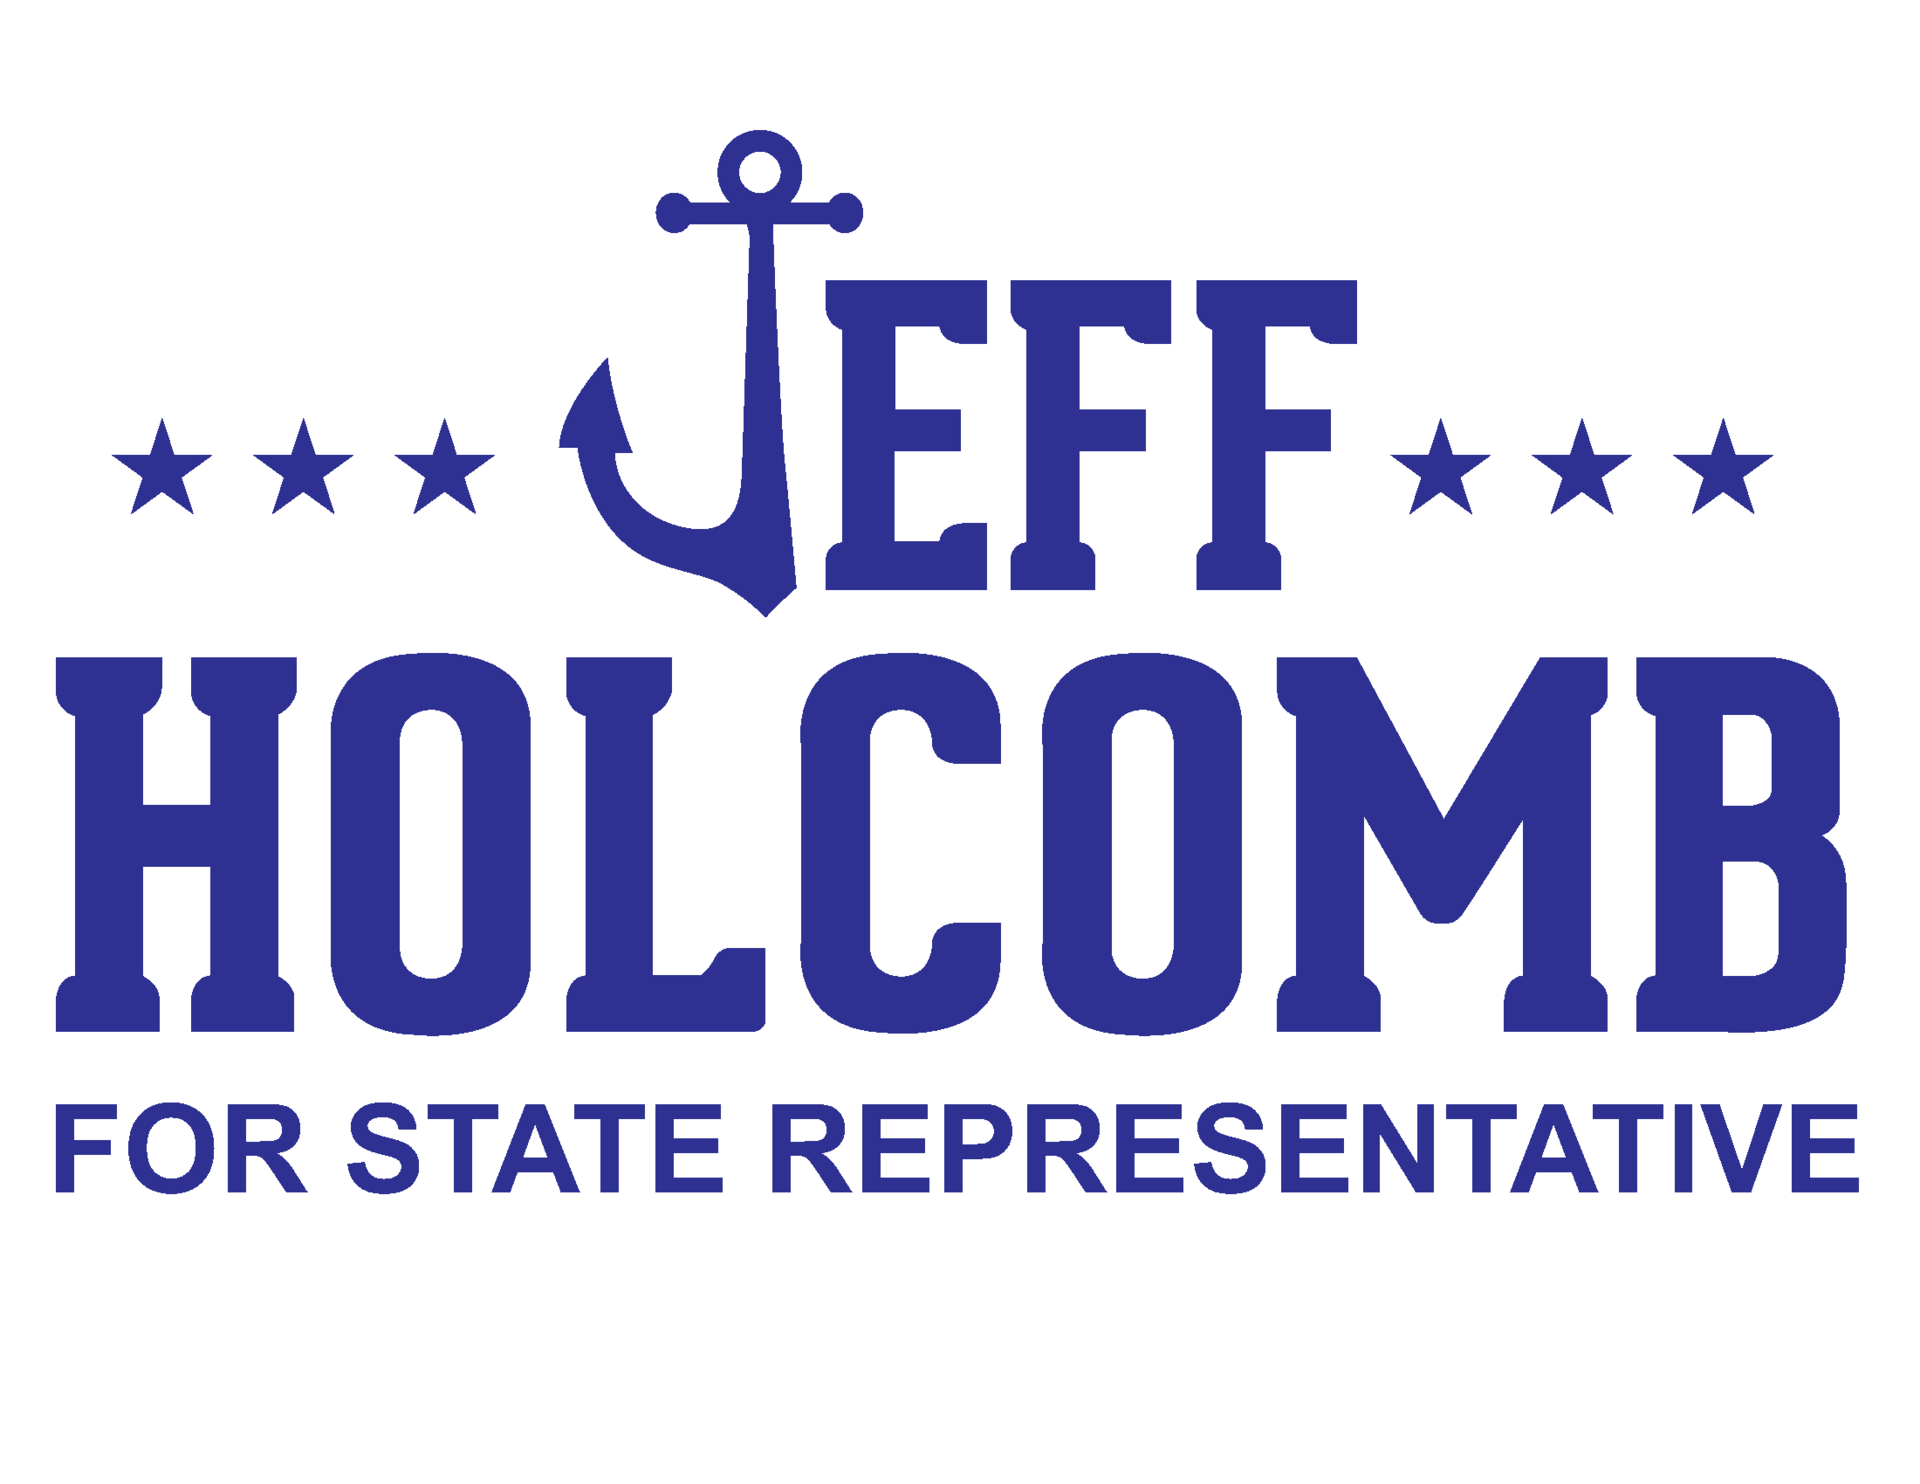 Jeff holcomb   plain logo  blue